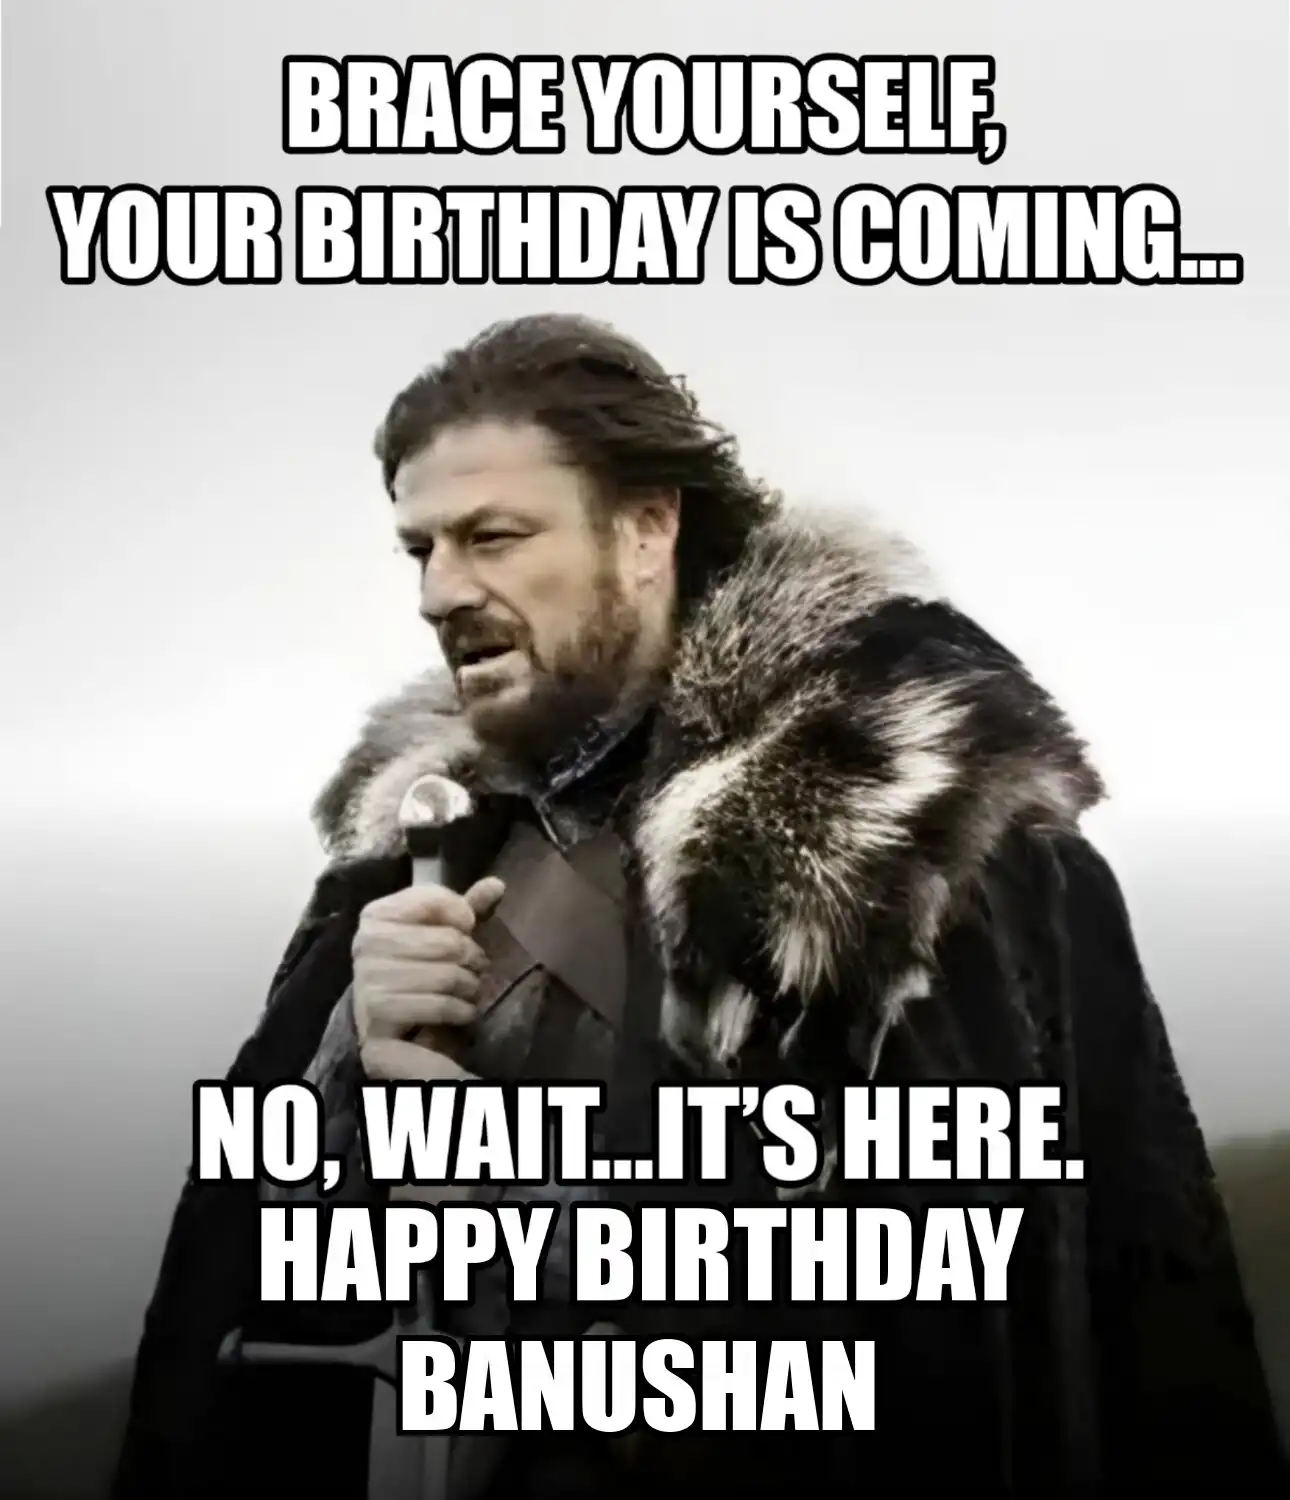 Happy Birthday Banushan Brace Yourself Your Birthday Is Coming Meme